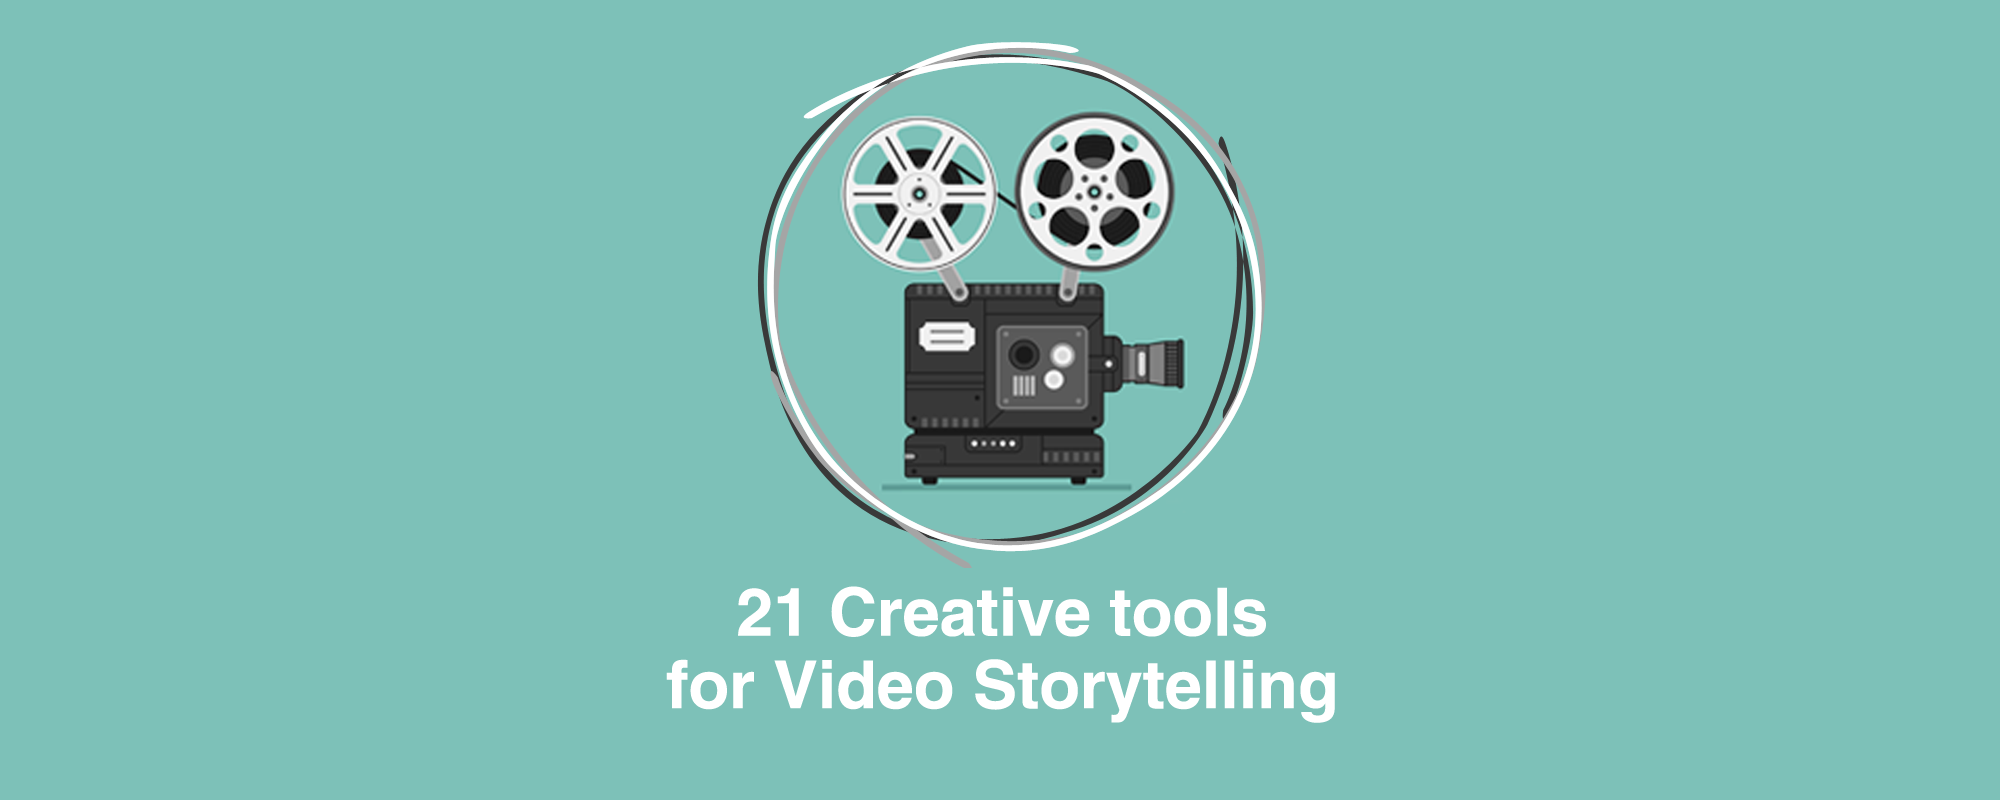 Creative-video-storytelling-tools